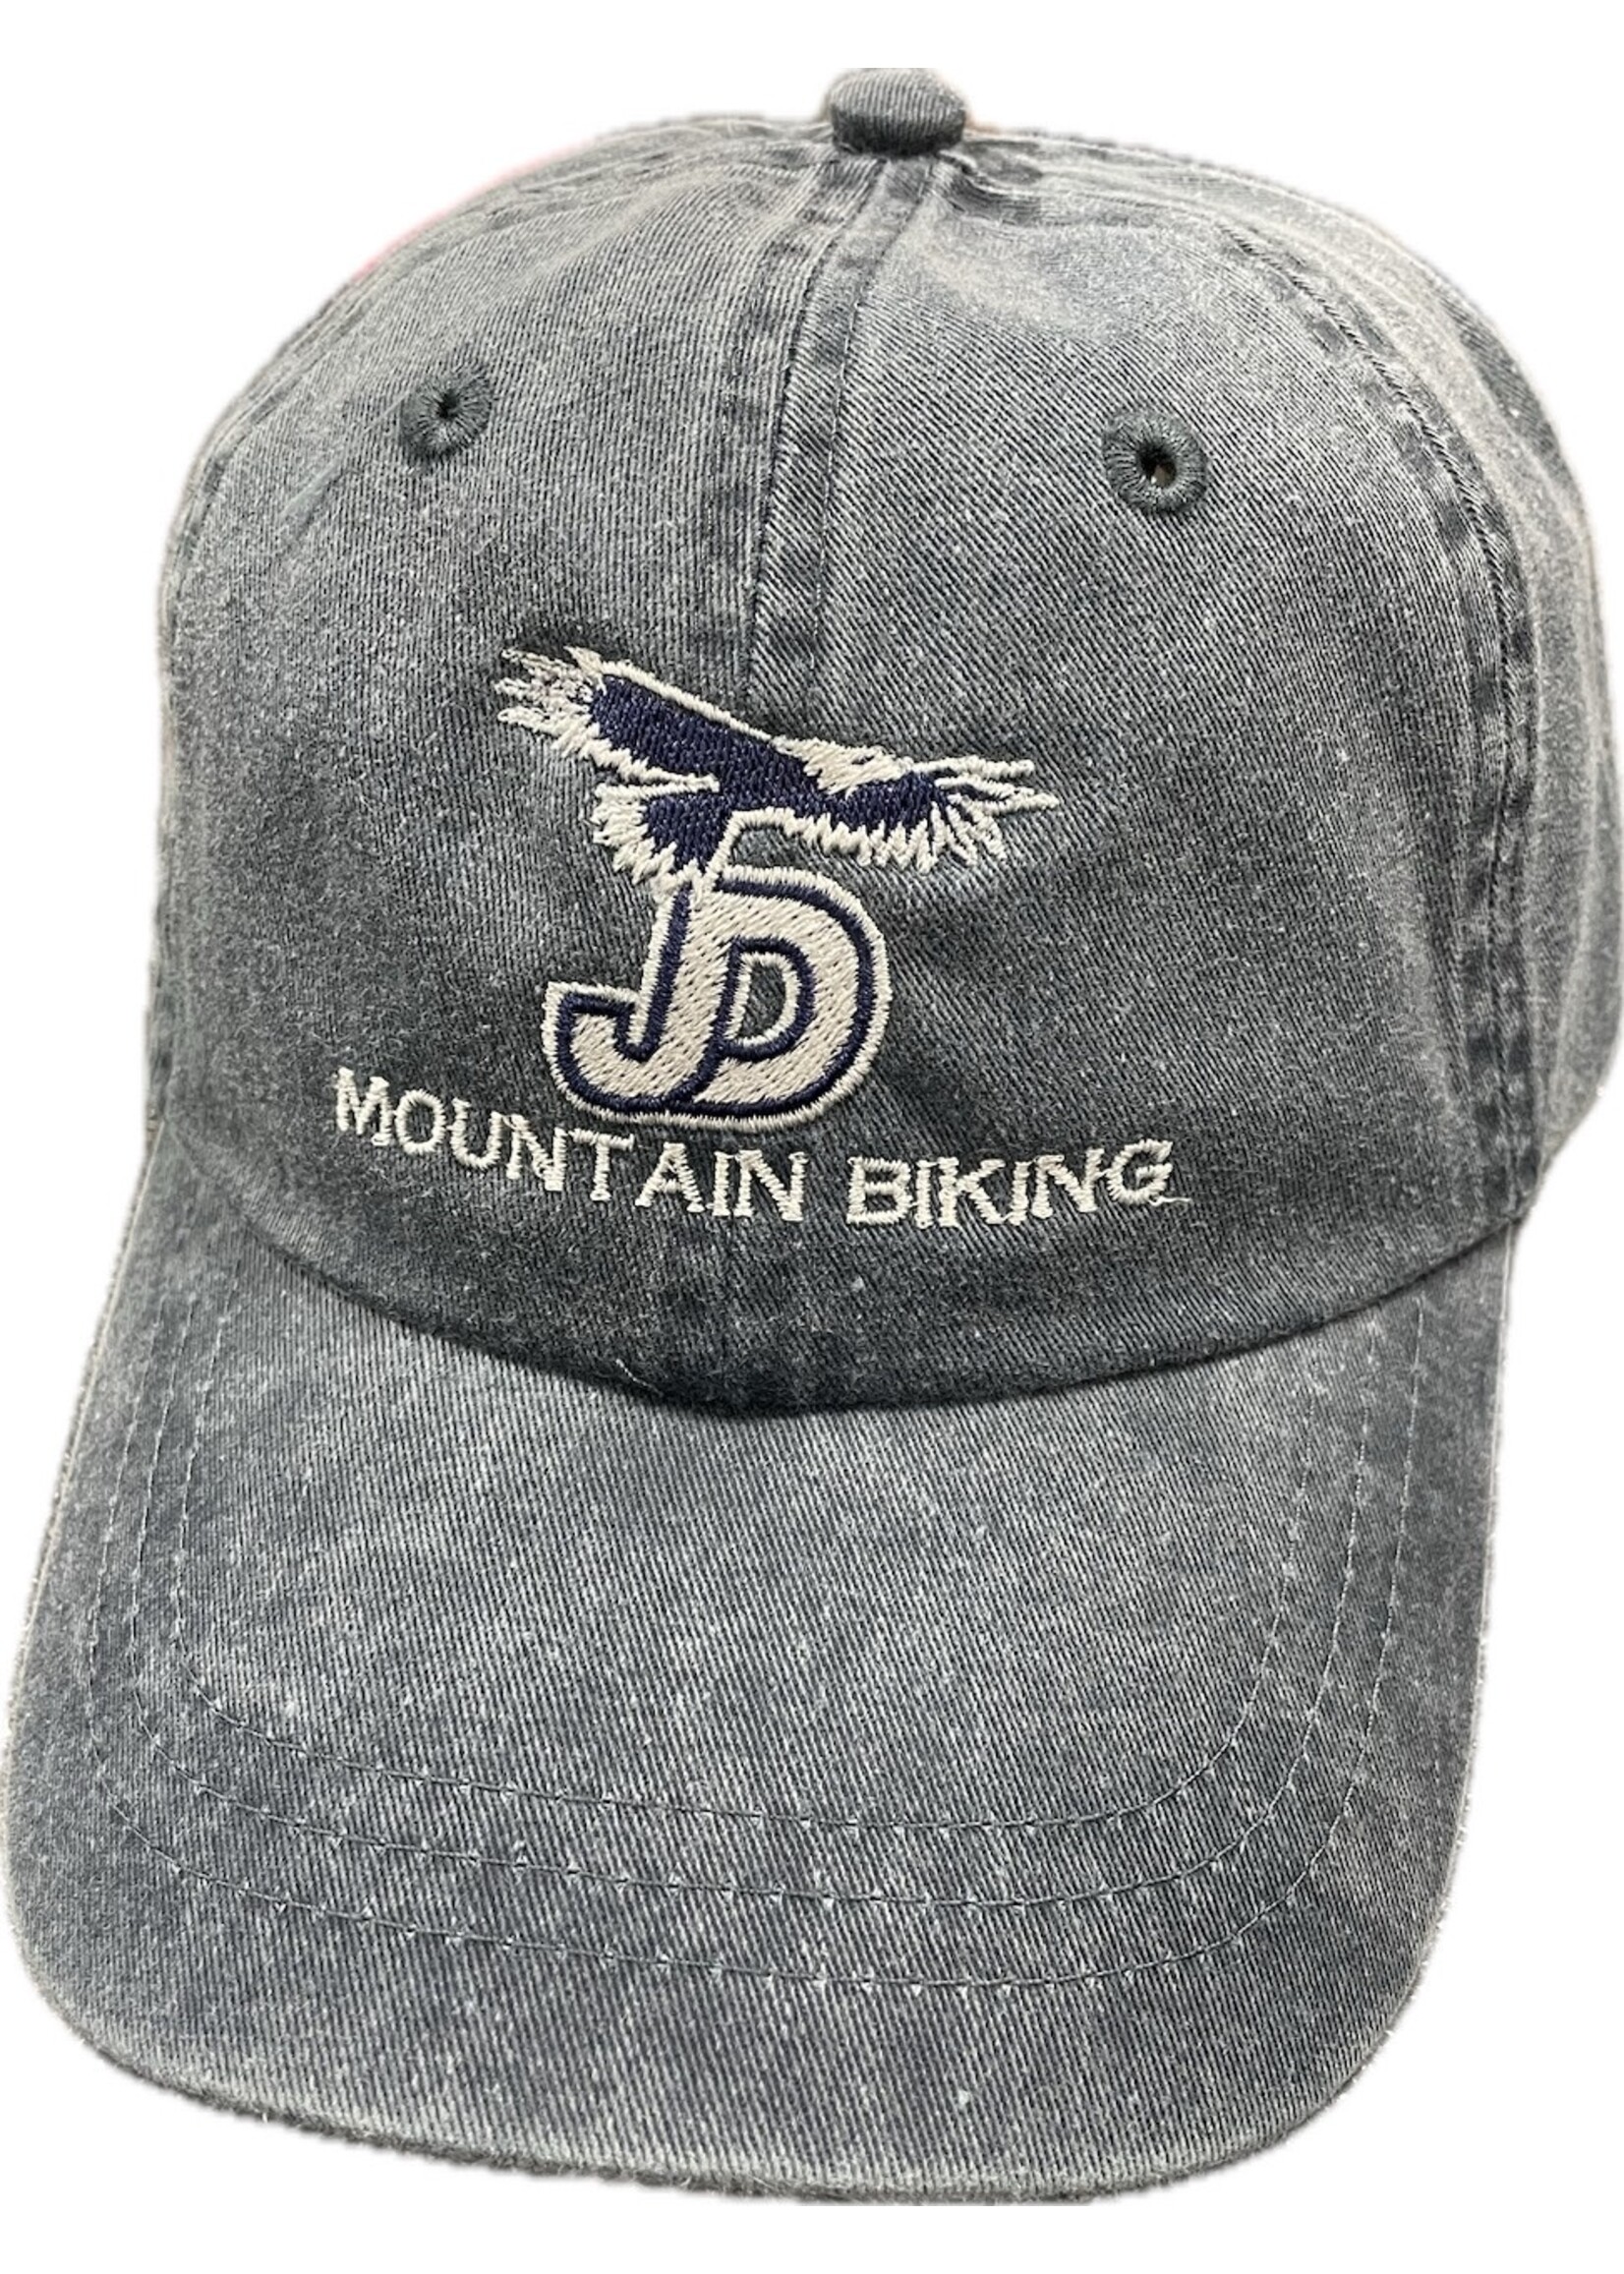 NON-UNIFORM Denim JD Eagle Mountain Biking Hat